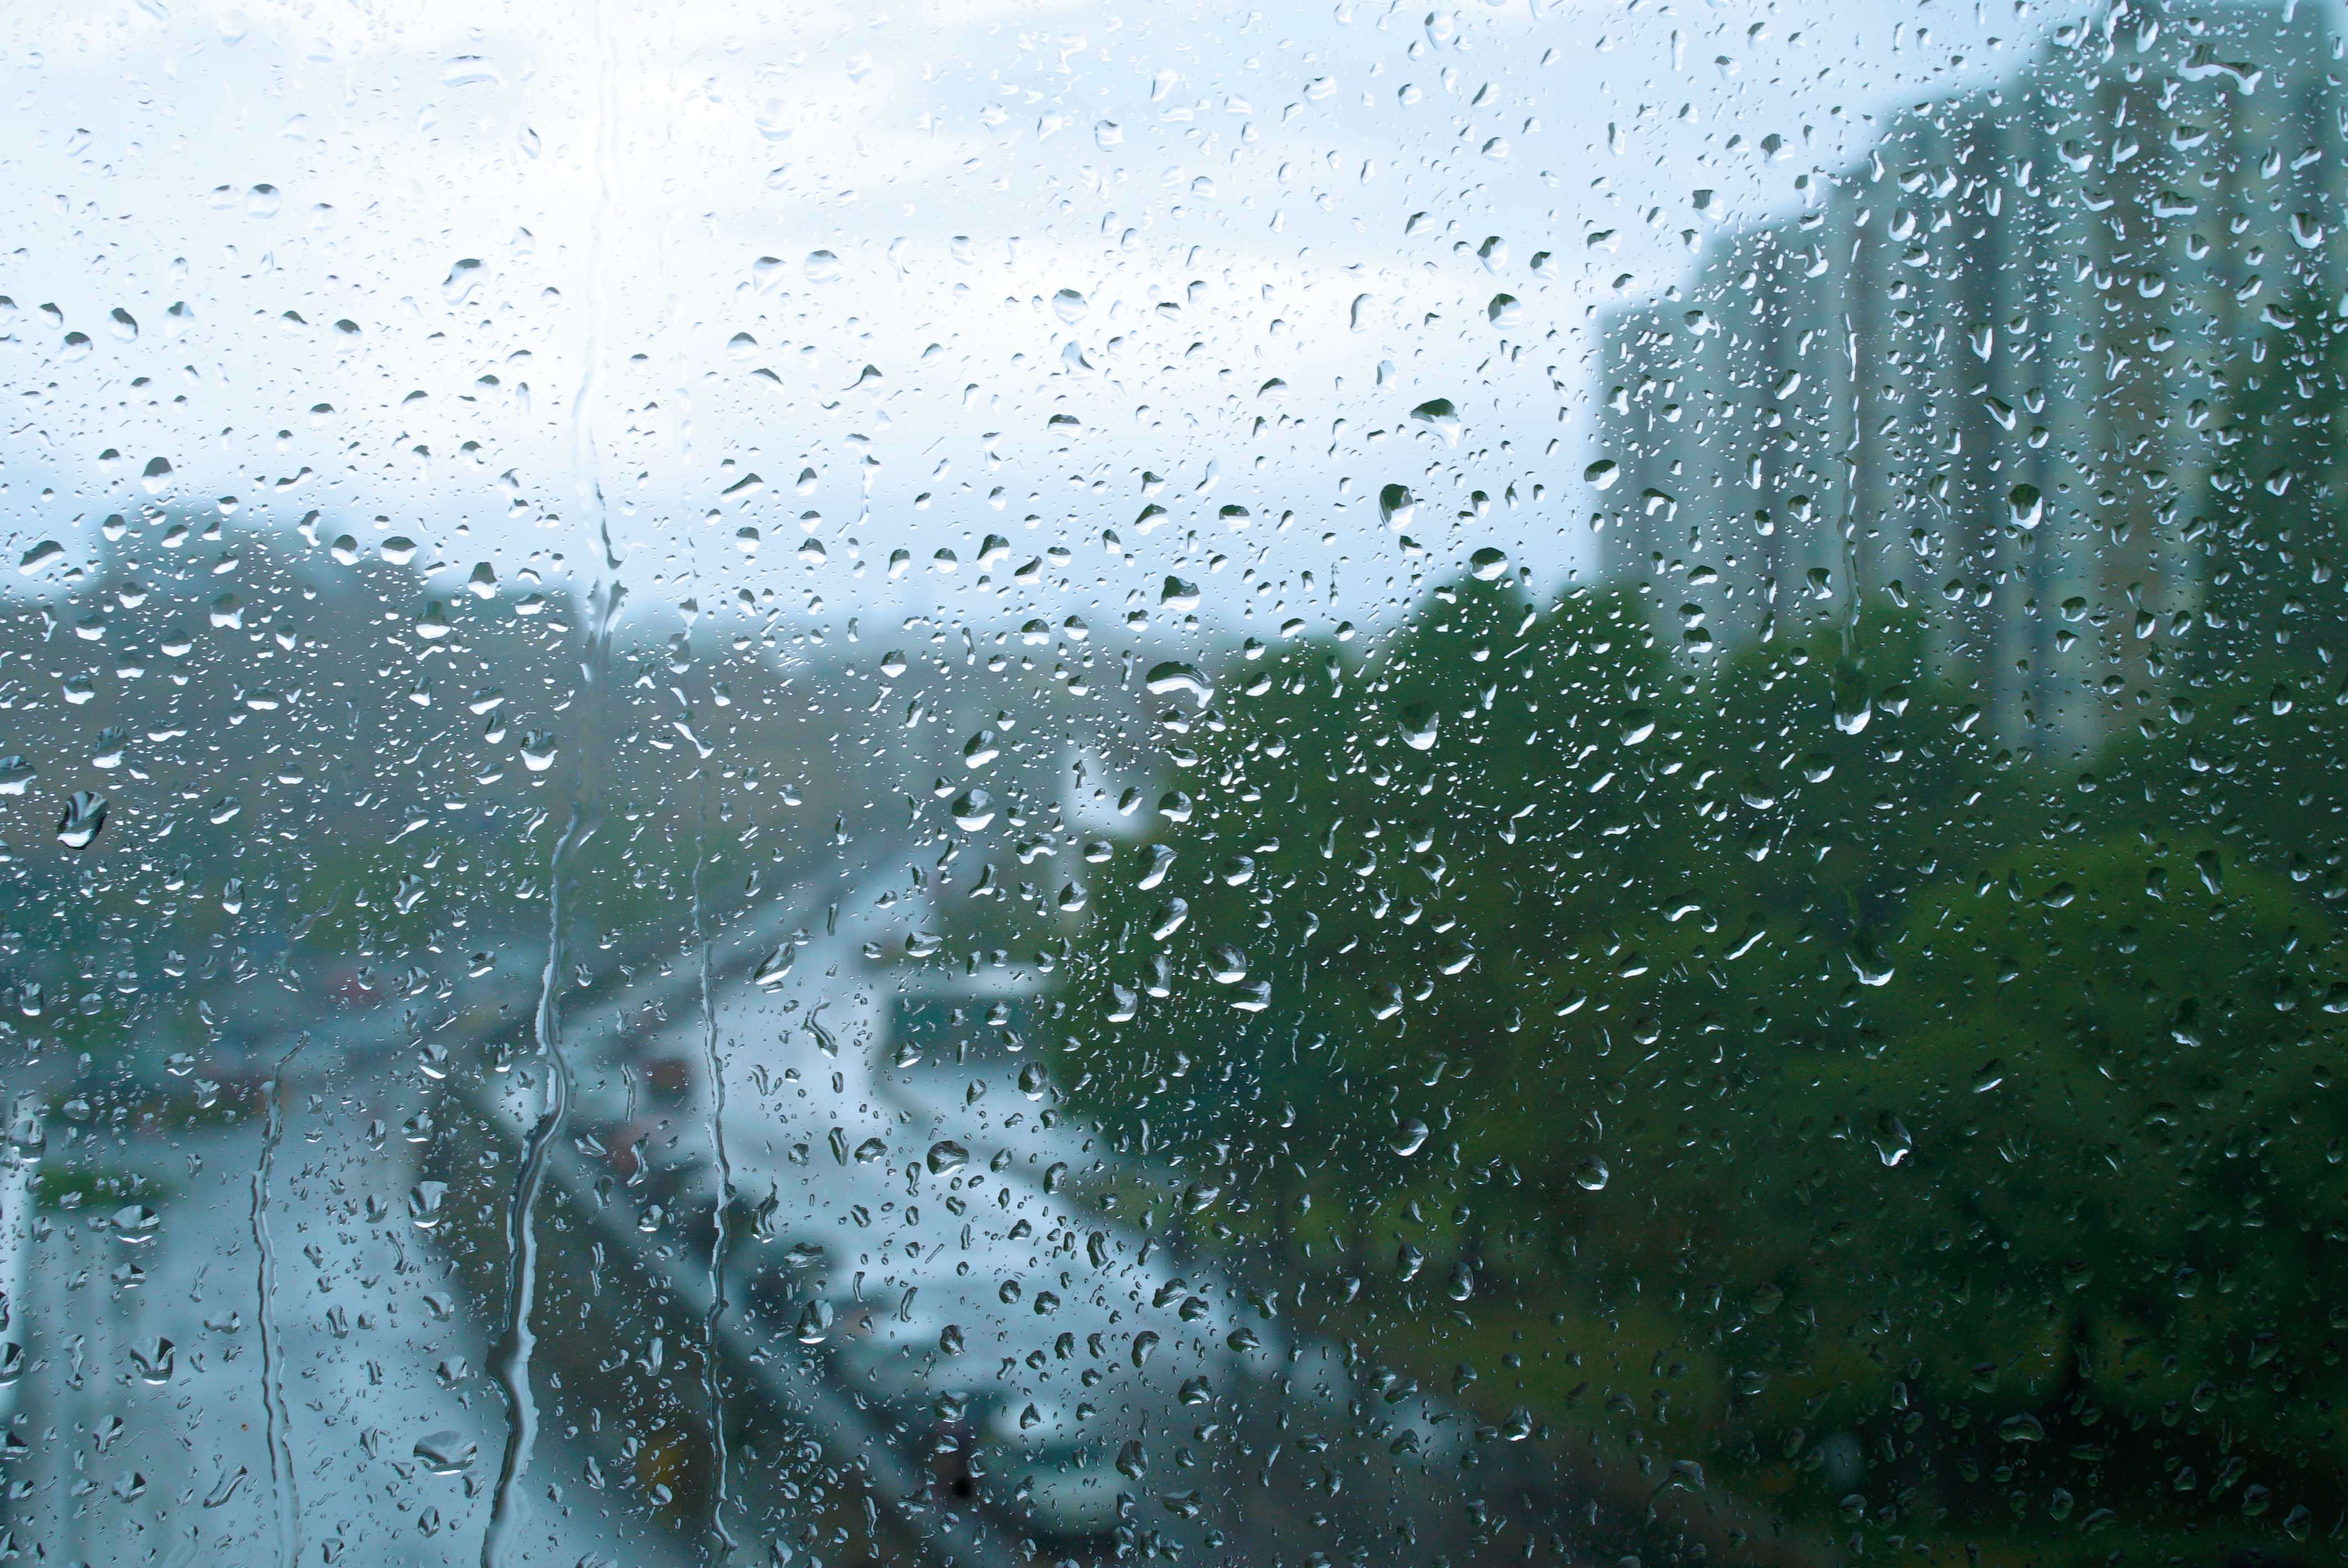 Rain on a window by mjtrimble